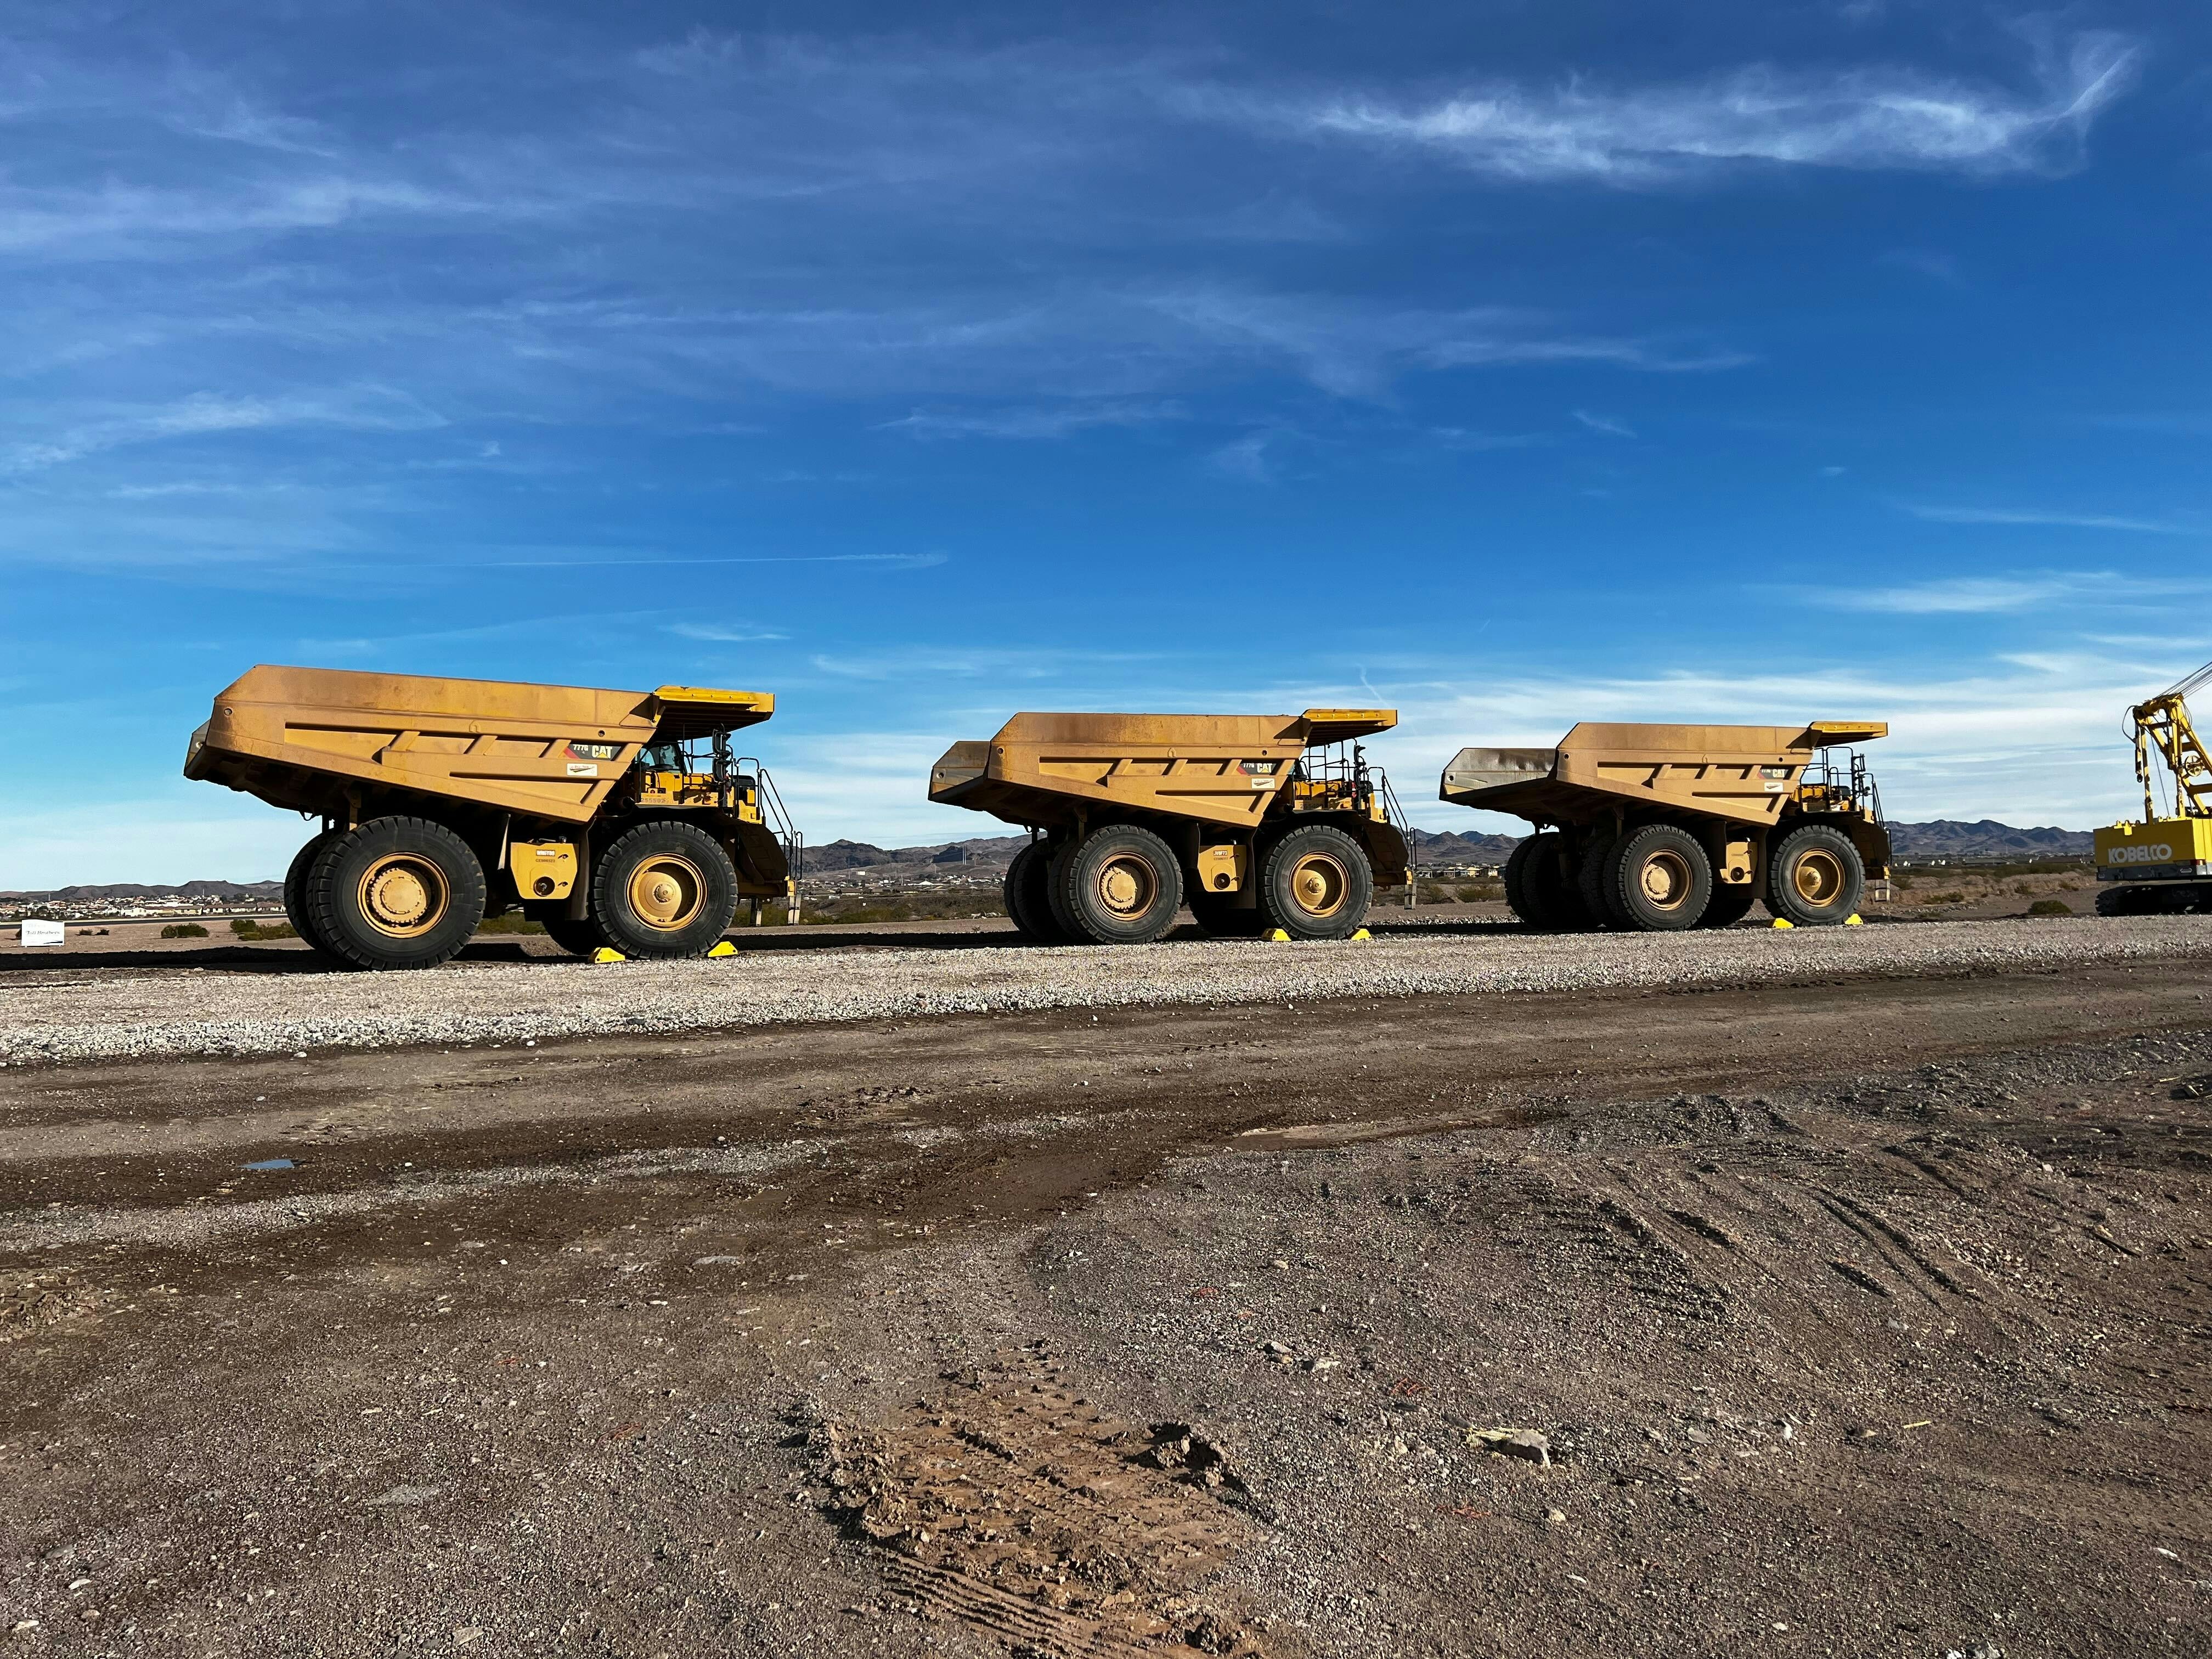 The Caterpillar Mining Haul Truck Breakdown